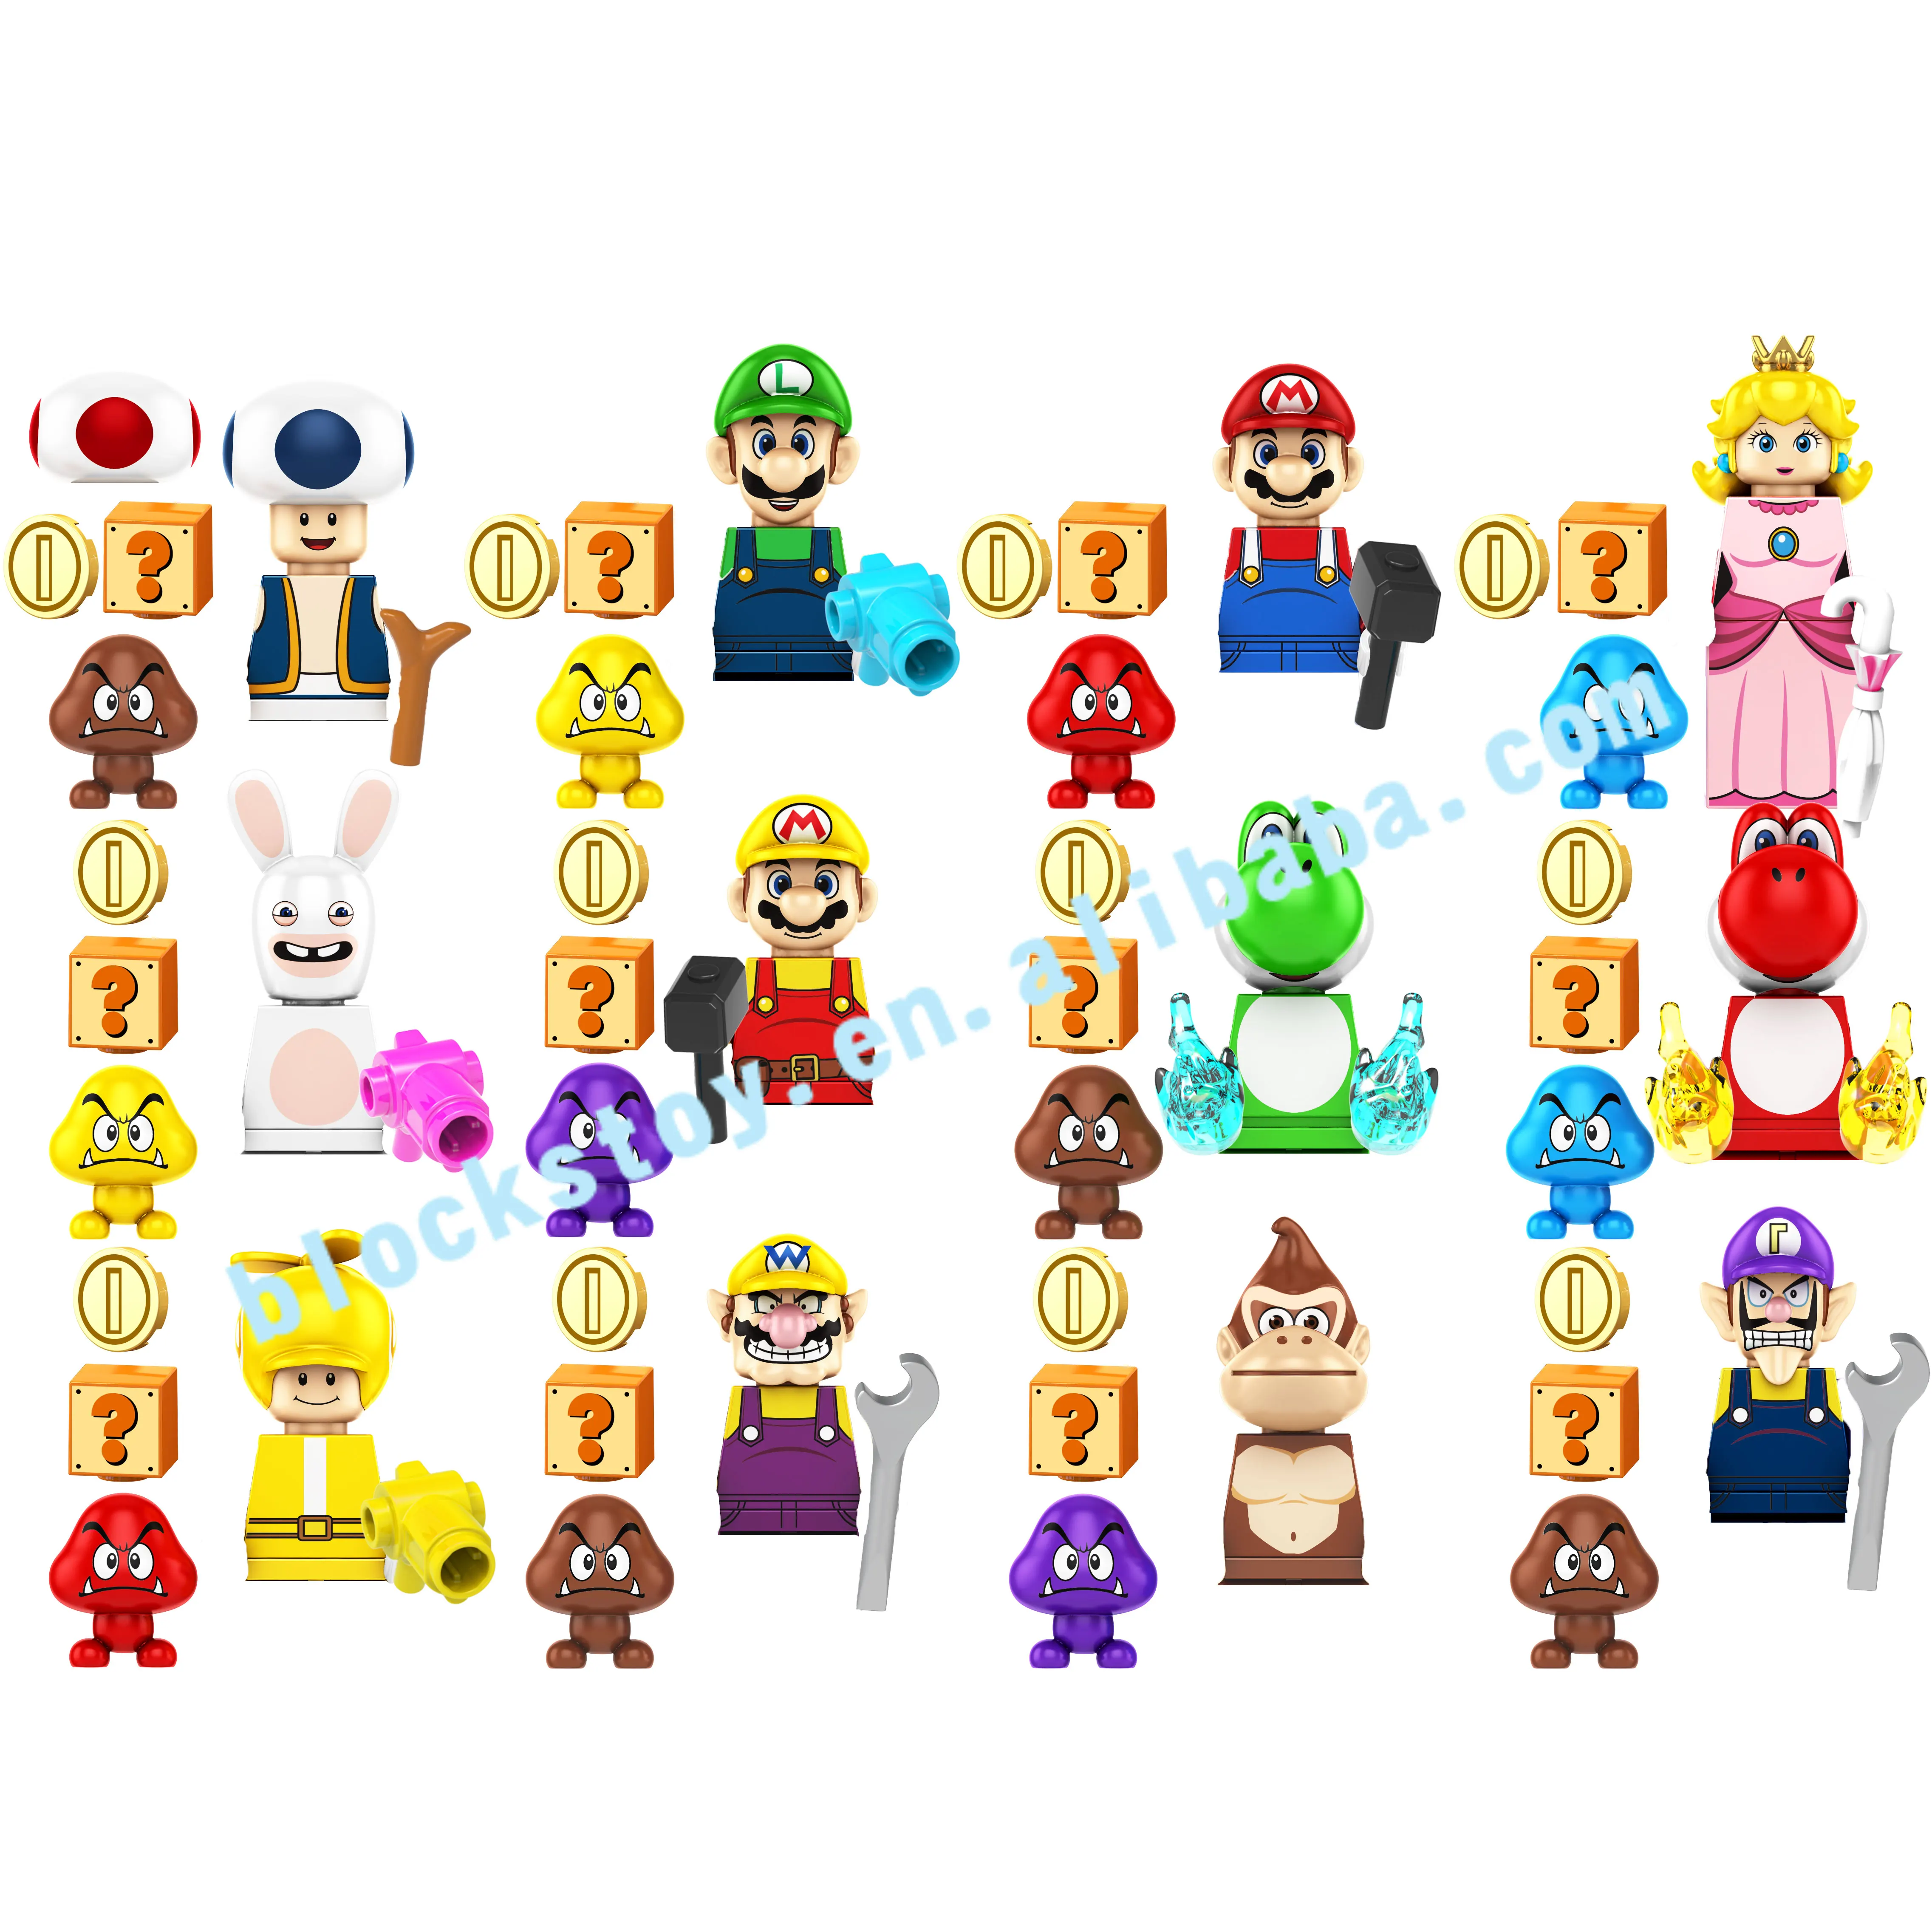 

KF6186 New Game Series Super Bros Mario Luigi Orangutan Wario Peach Kinopio Mini Building Block Figures Toys For Kids